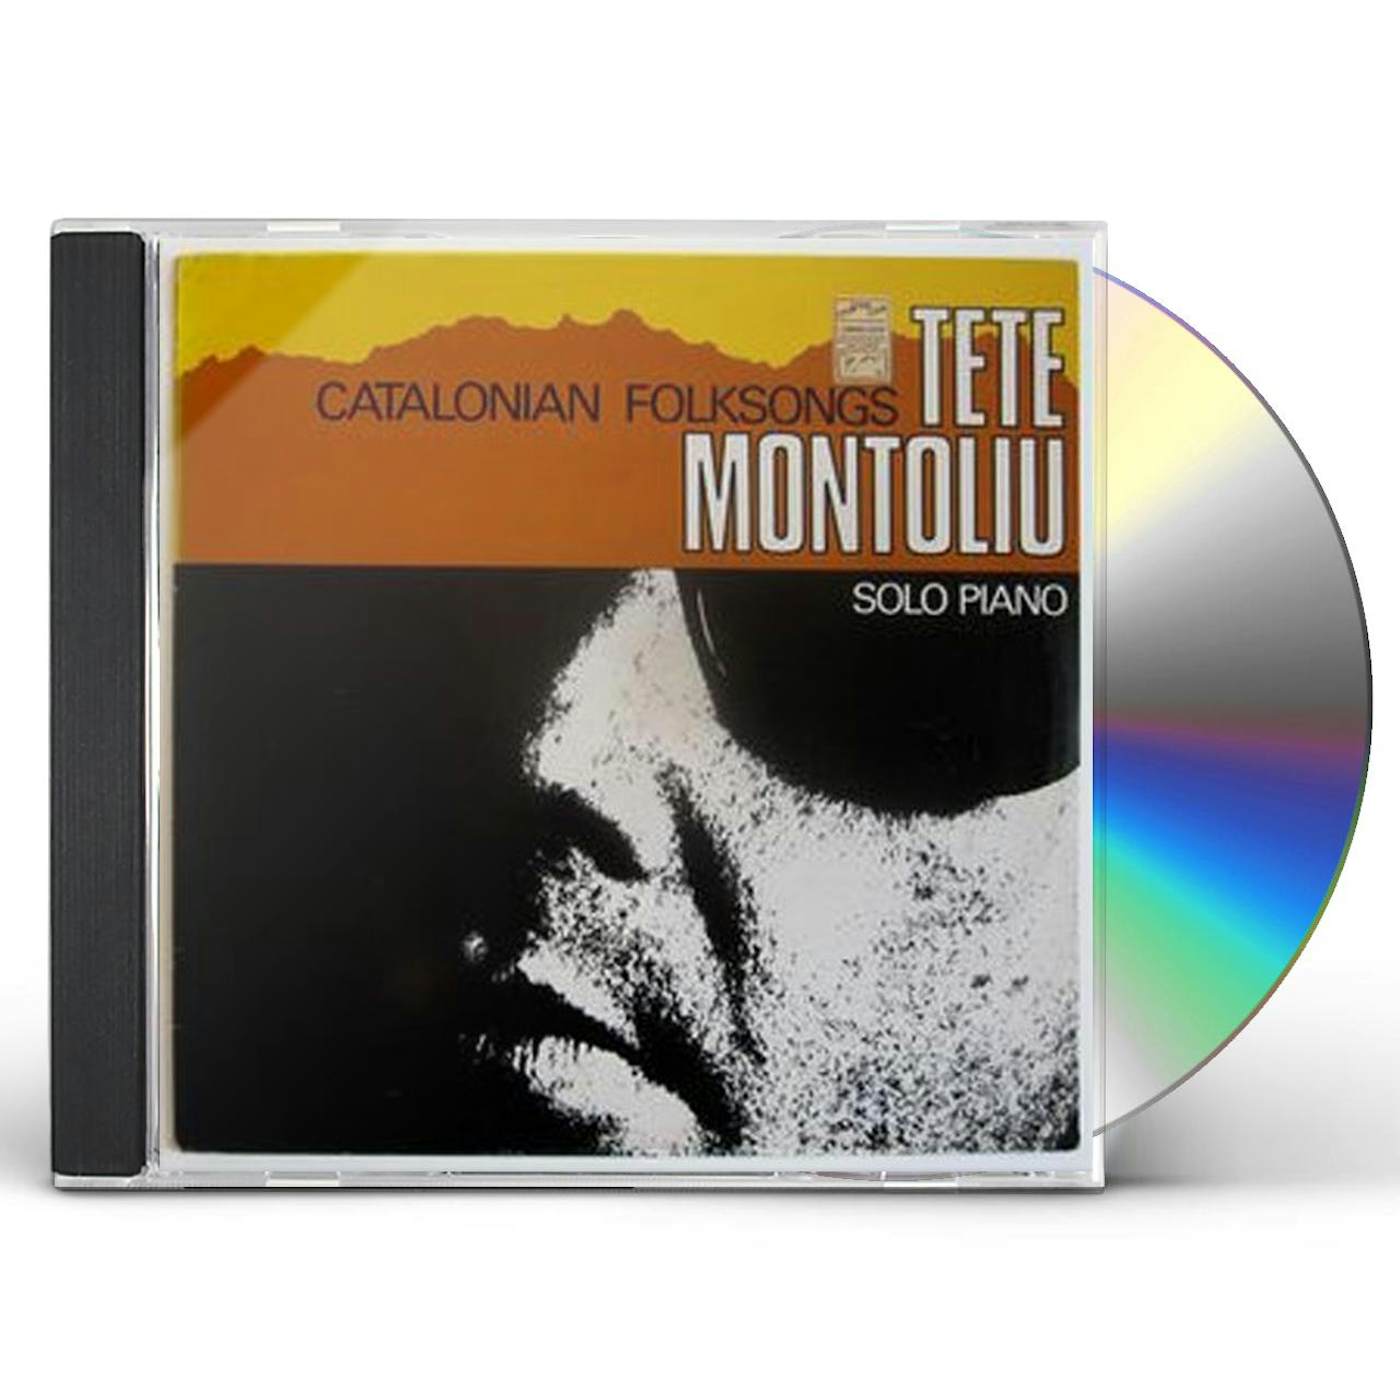 Tete Montoliu CATALONIAN FOLKSONGS: LIMITED CD